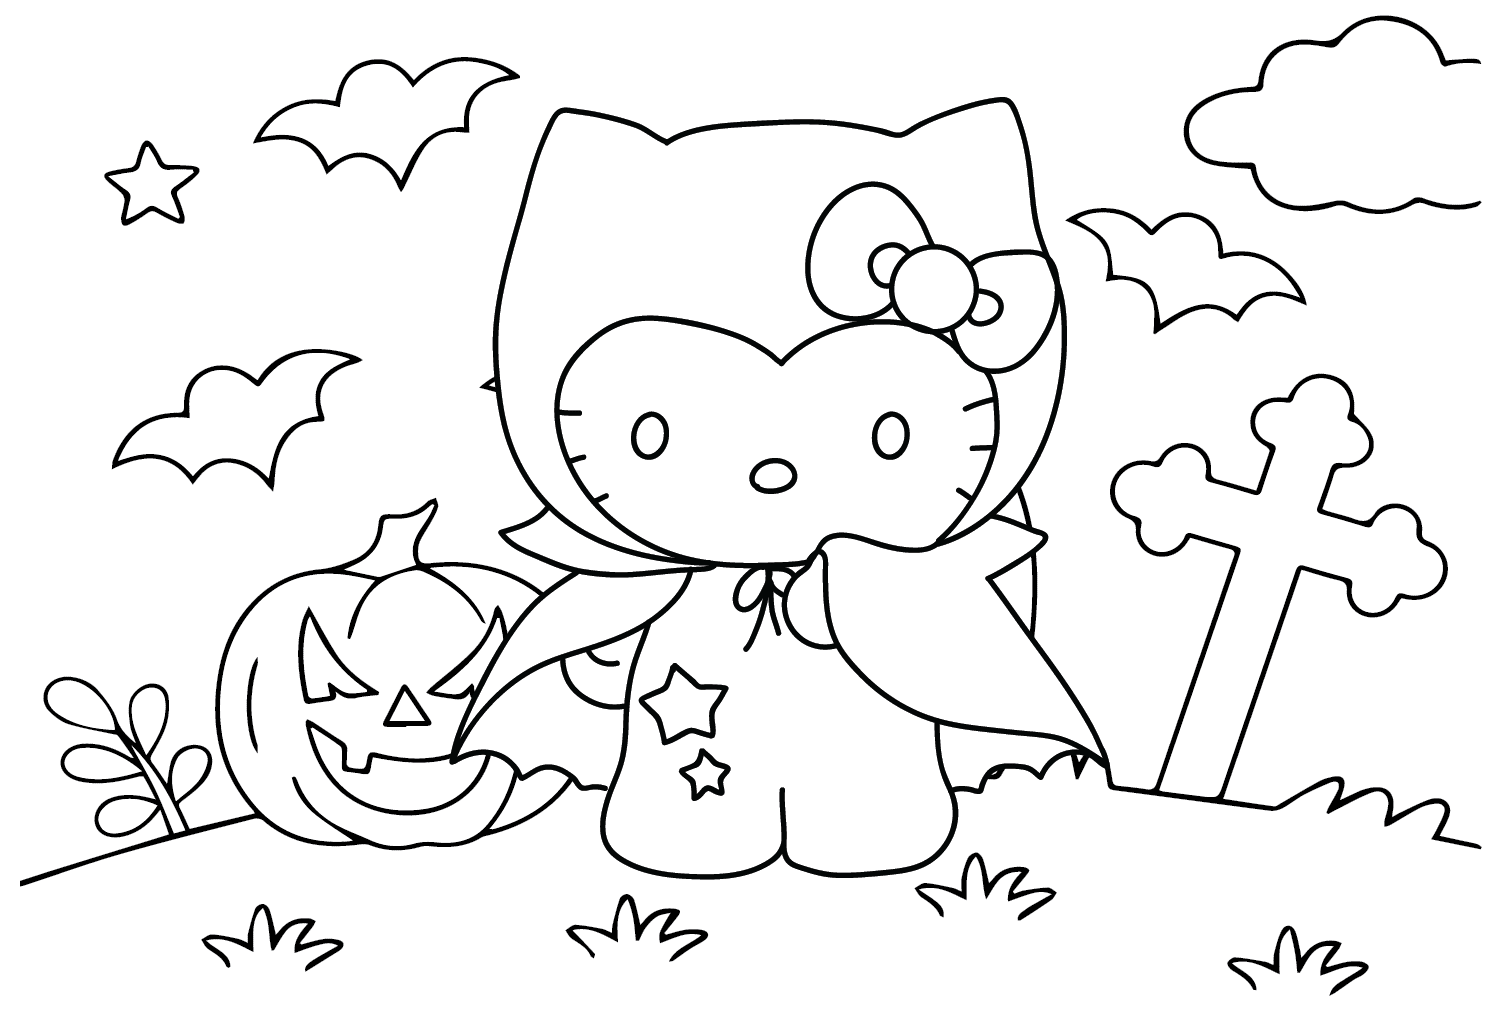 Página para colorear de Hello Kitty Halloween gratis de Halloween Hello Kitty